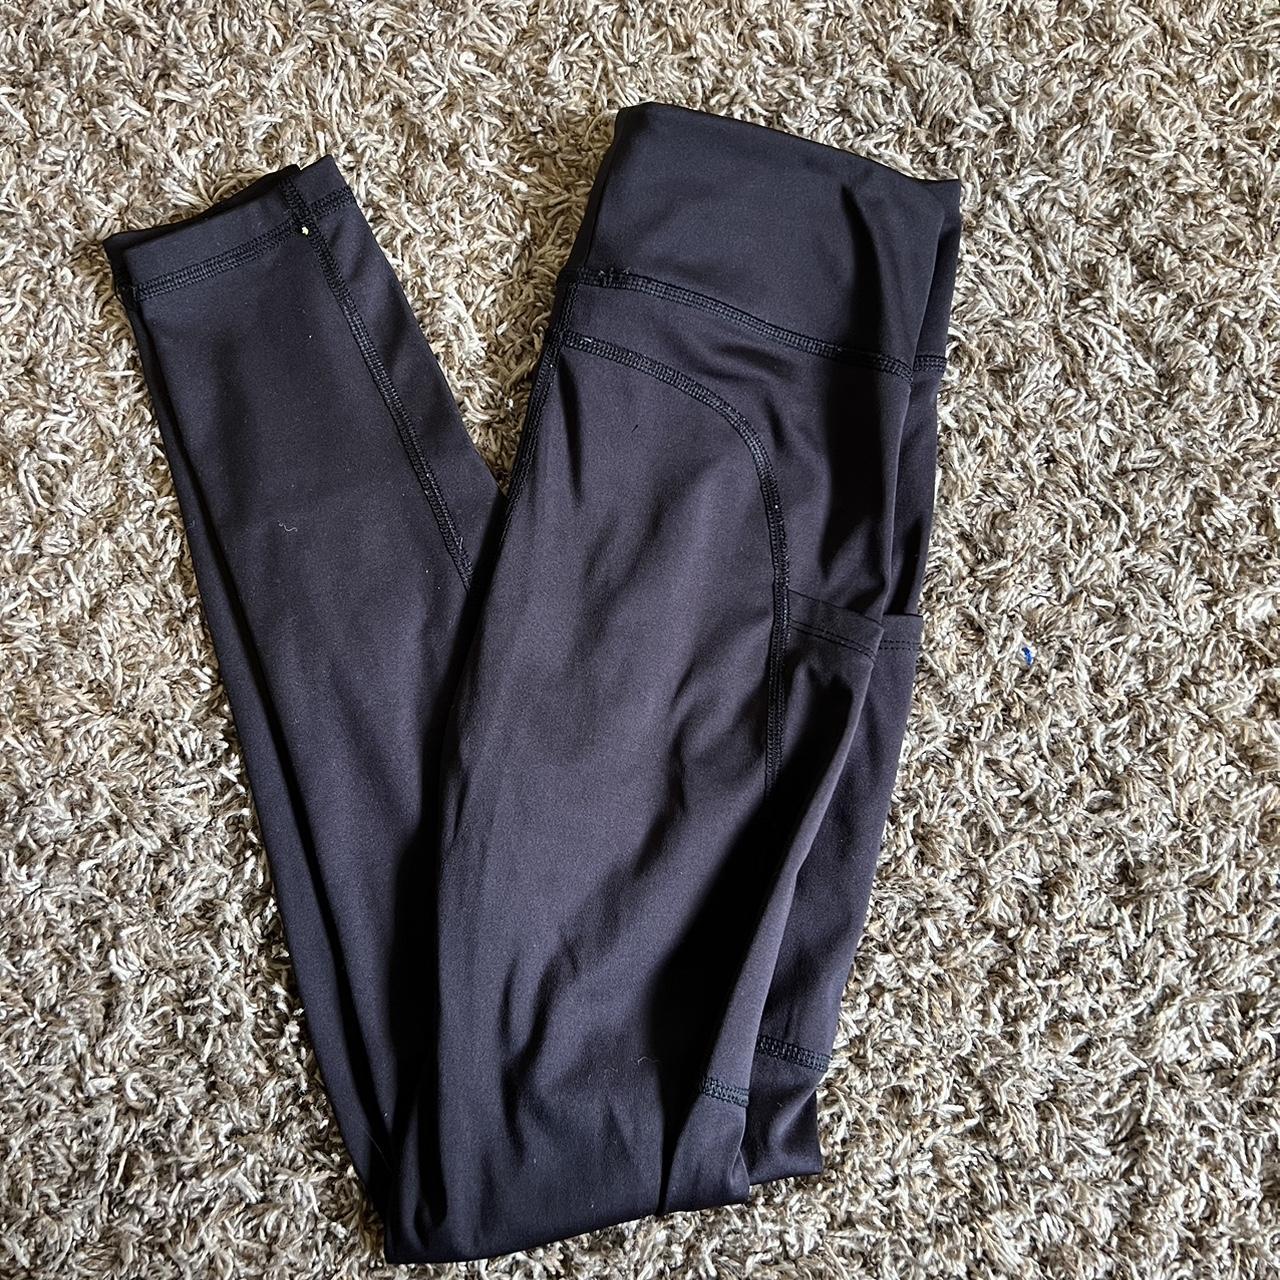 aeropostale leggings with pockets size s - Depop